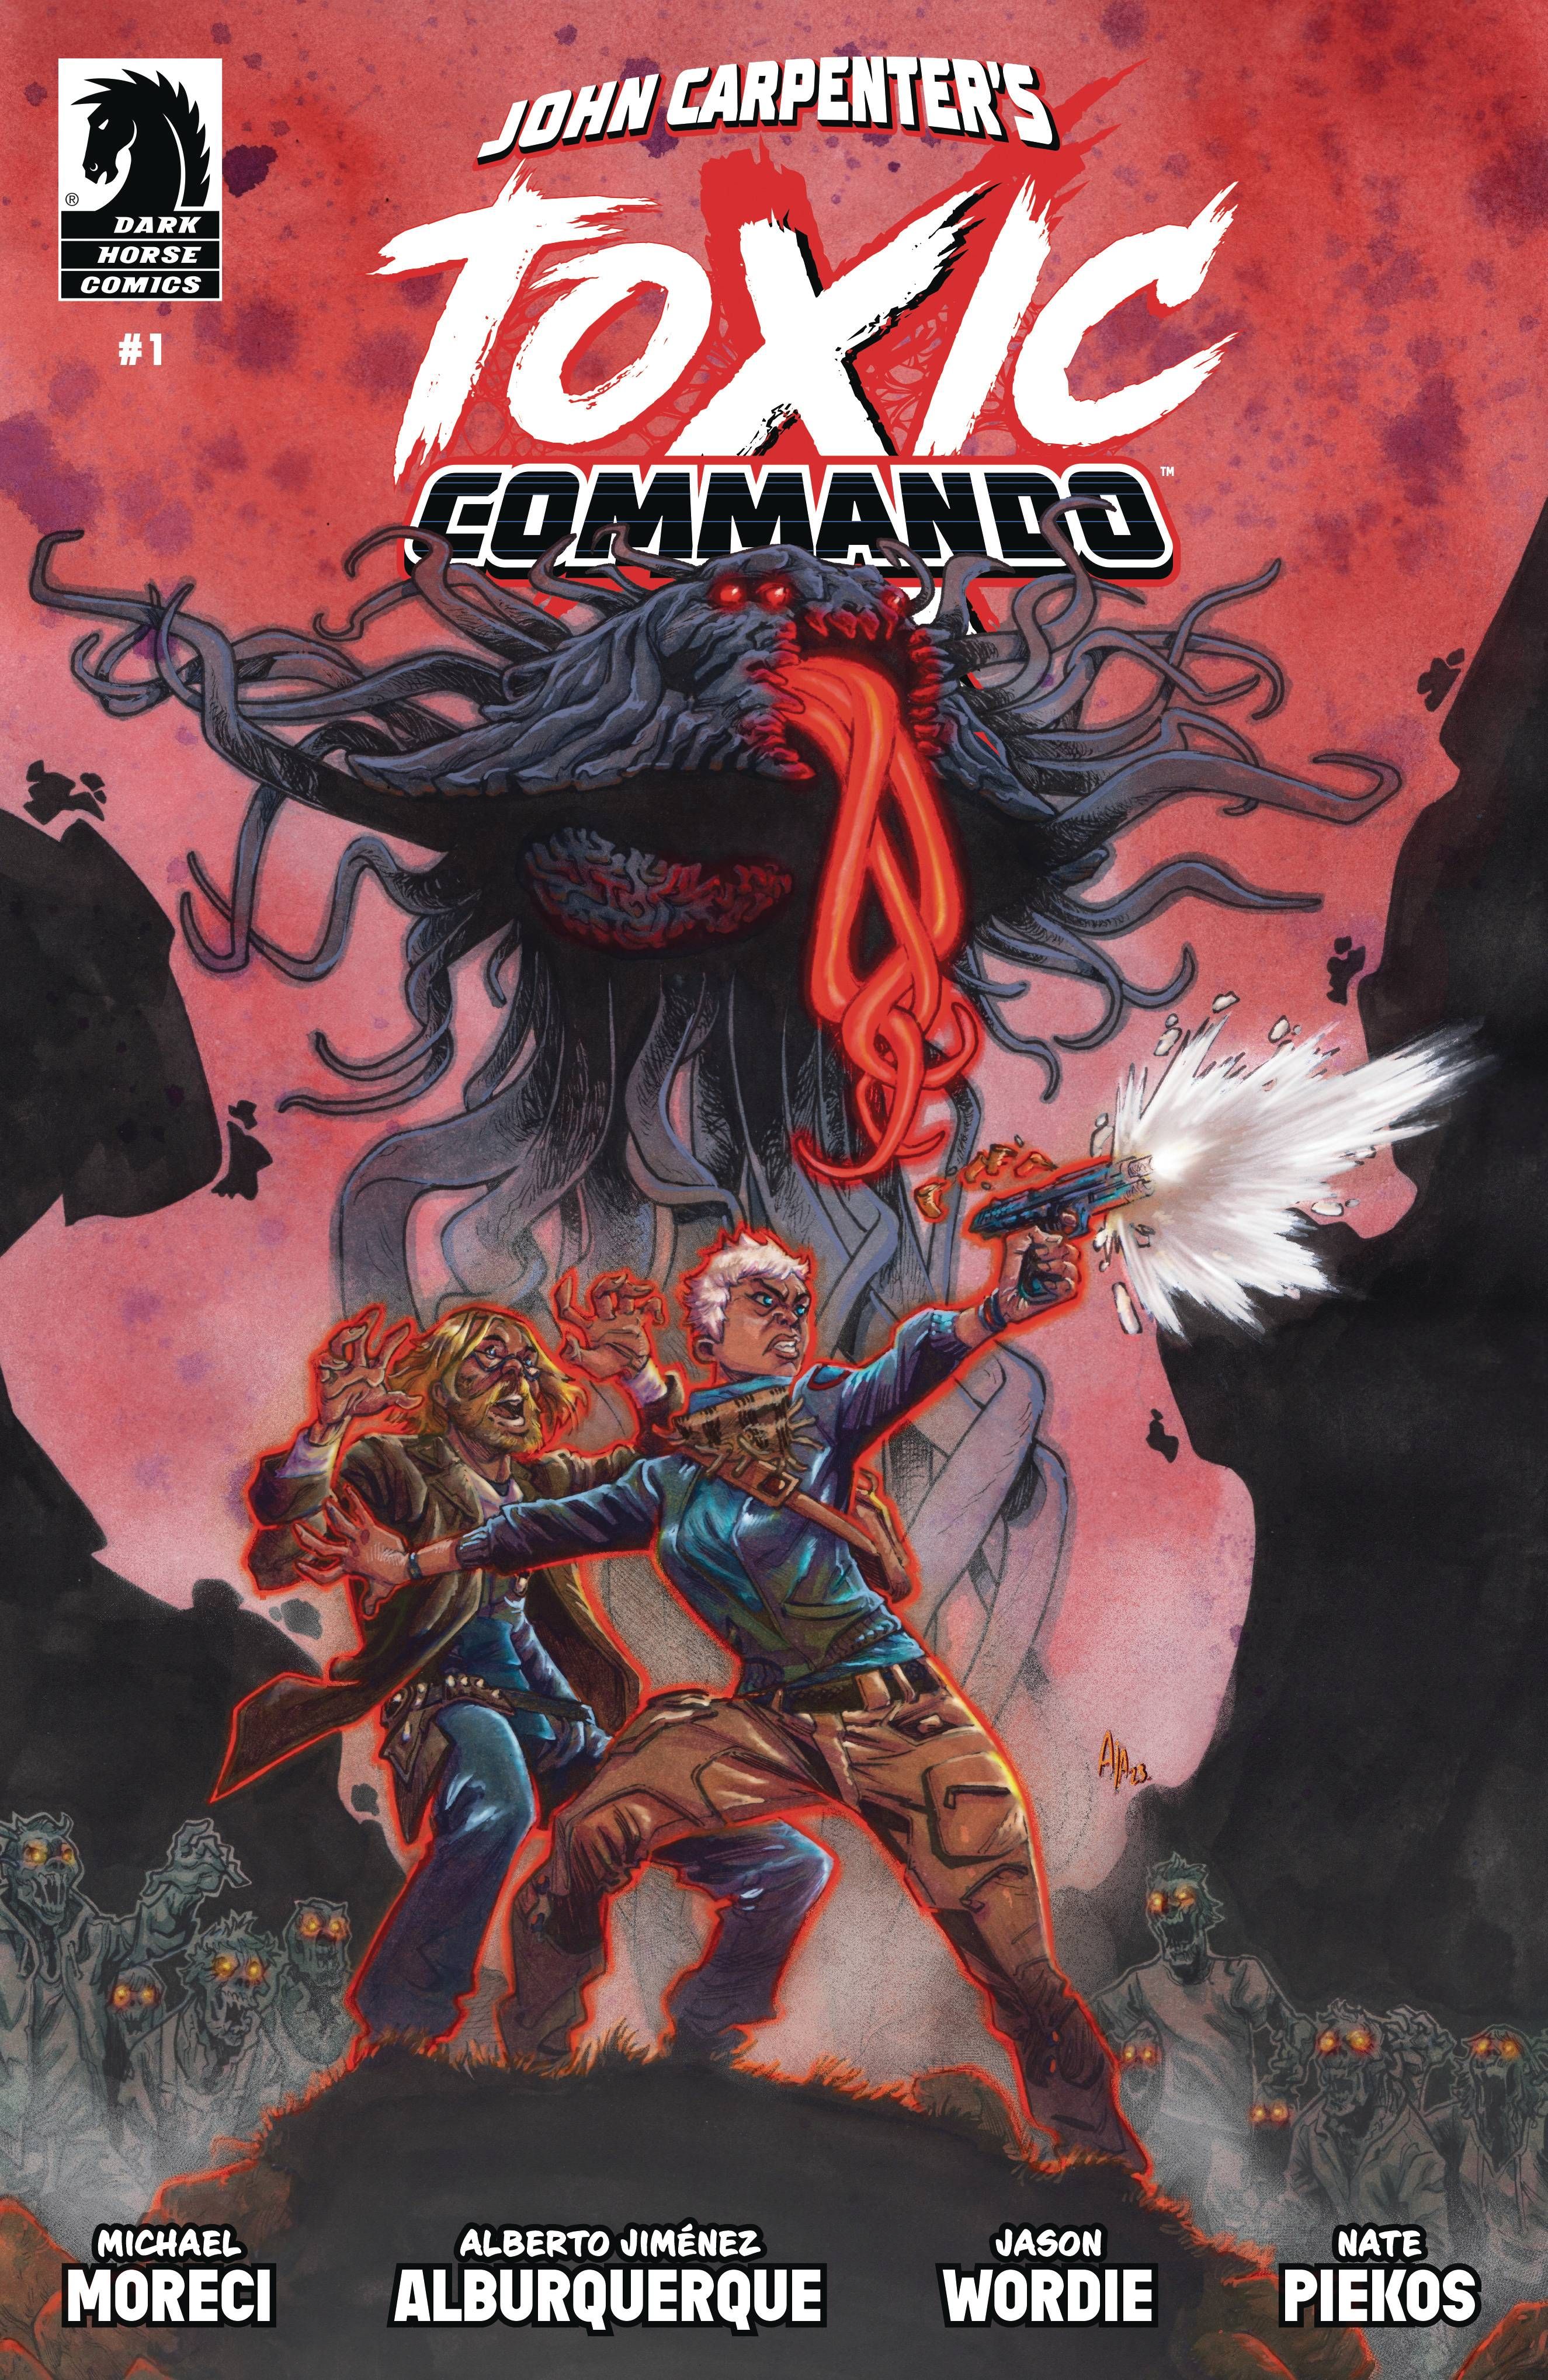 John Carpenter's Toxic Commando #1 Comic